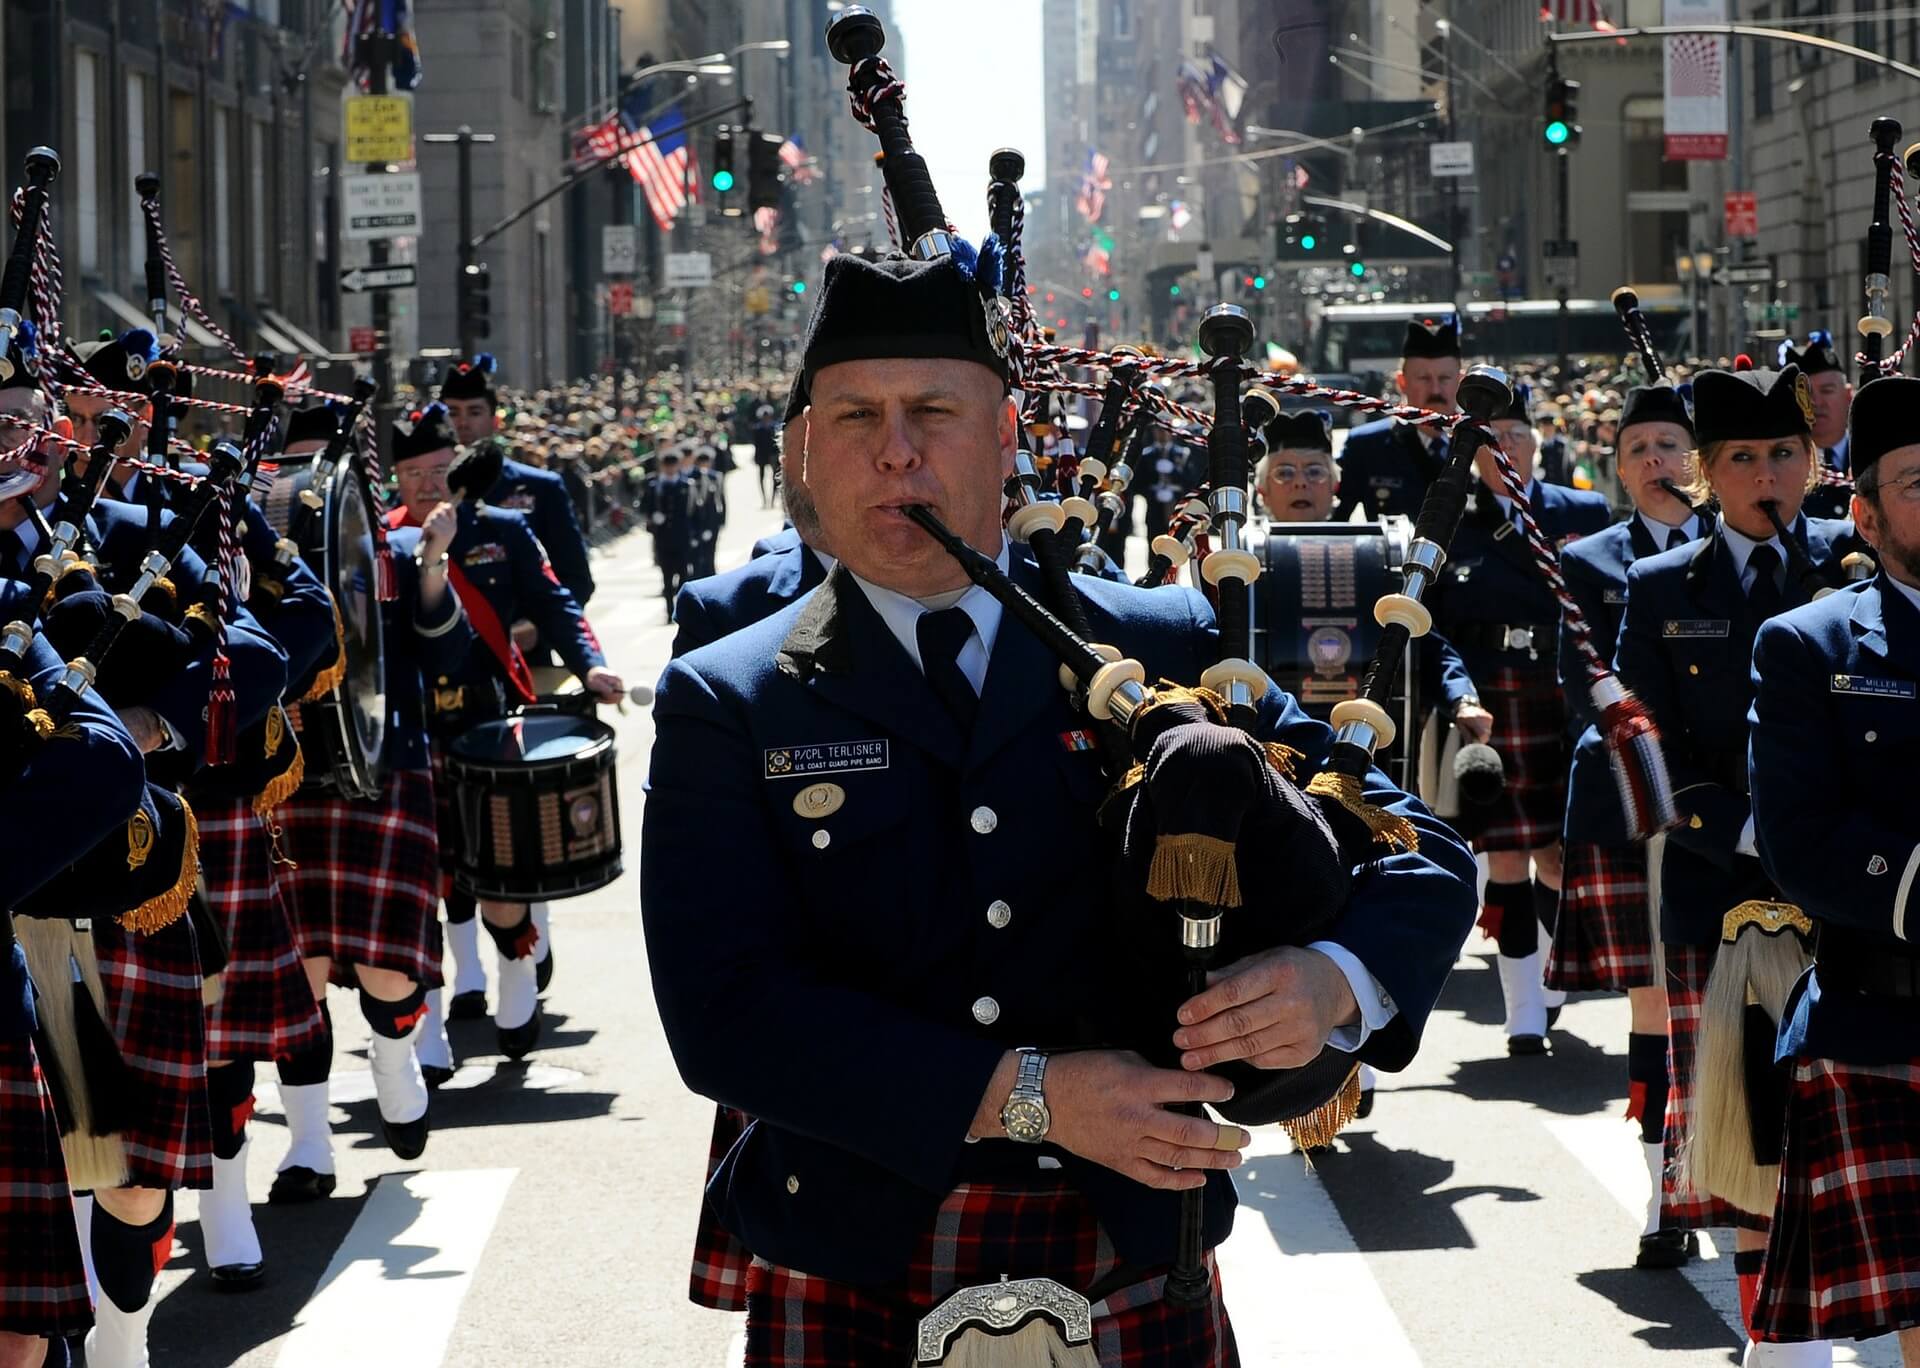 St patricks day parade in boston | FlyCheapAlways